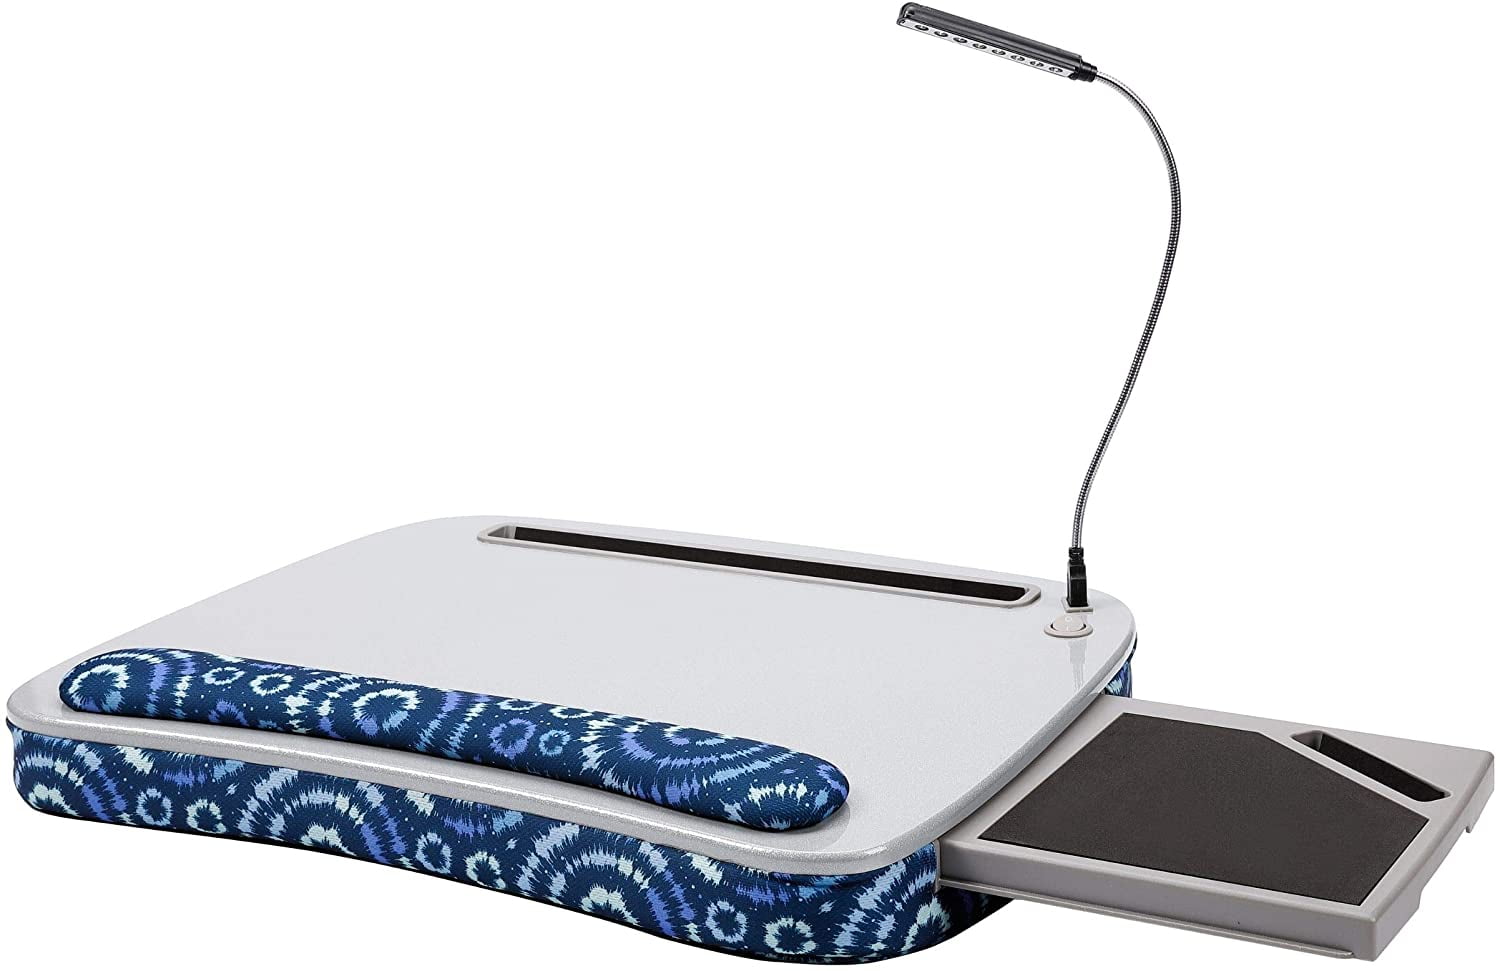 MESA Multi-Tasking Lap Tray for Laptops Smart Phones Tables & Books 